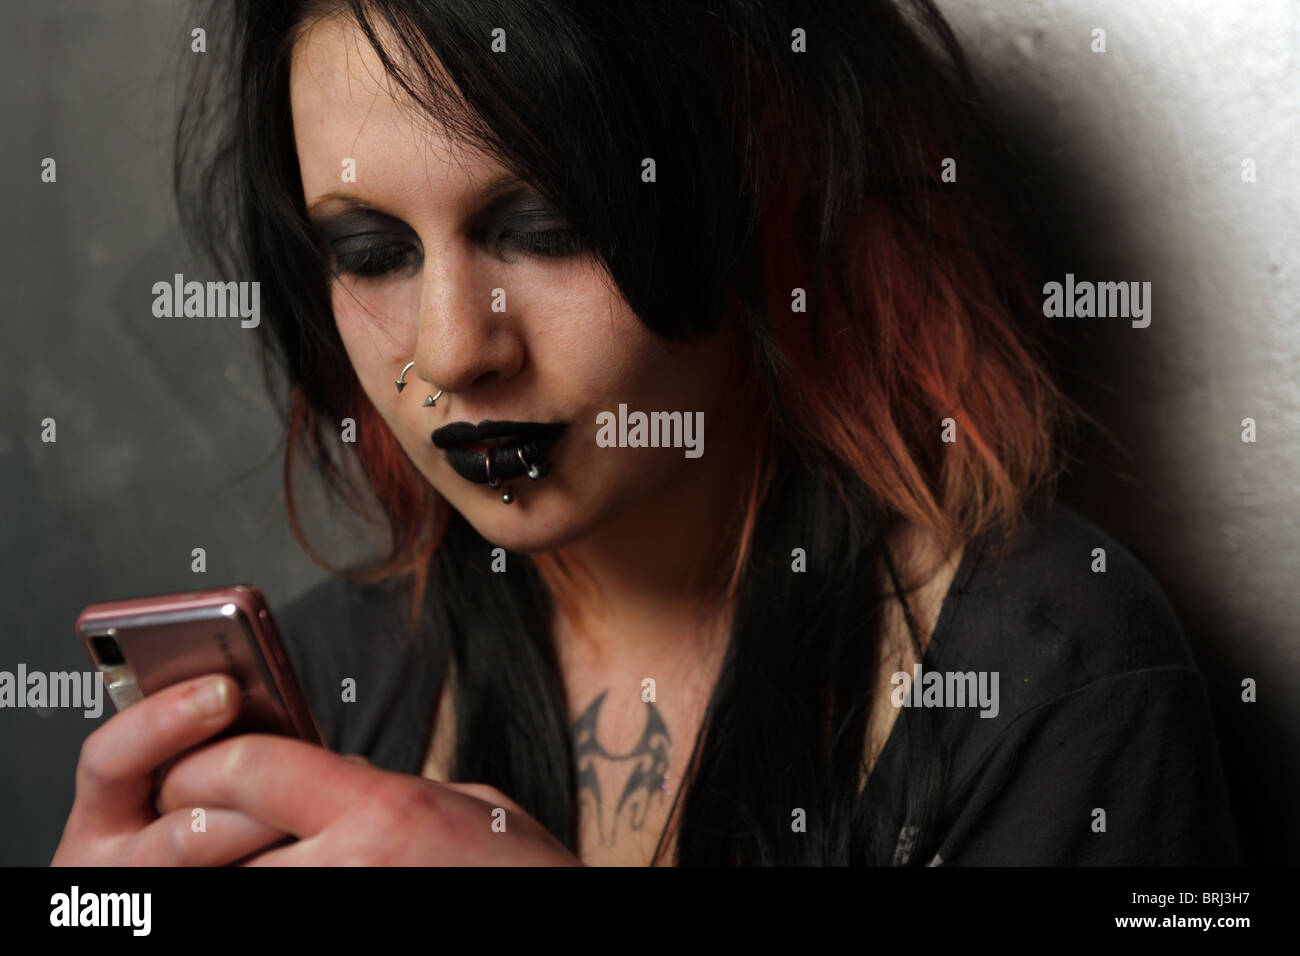 Goth woman holding a mobile phone dans ses mains. Banque D'Images